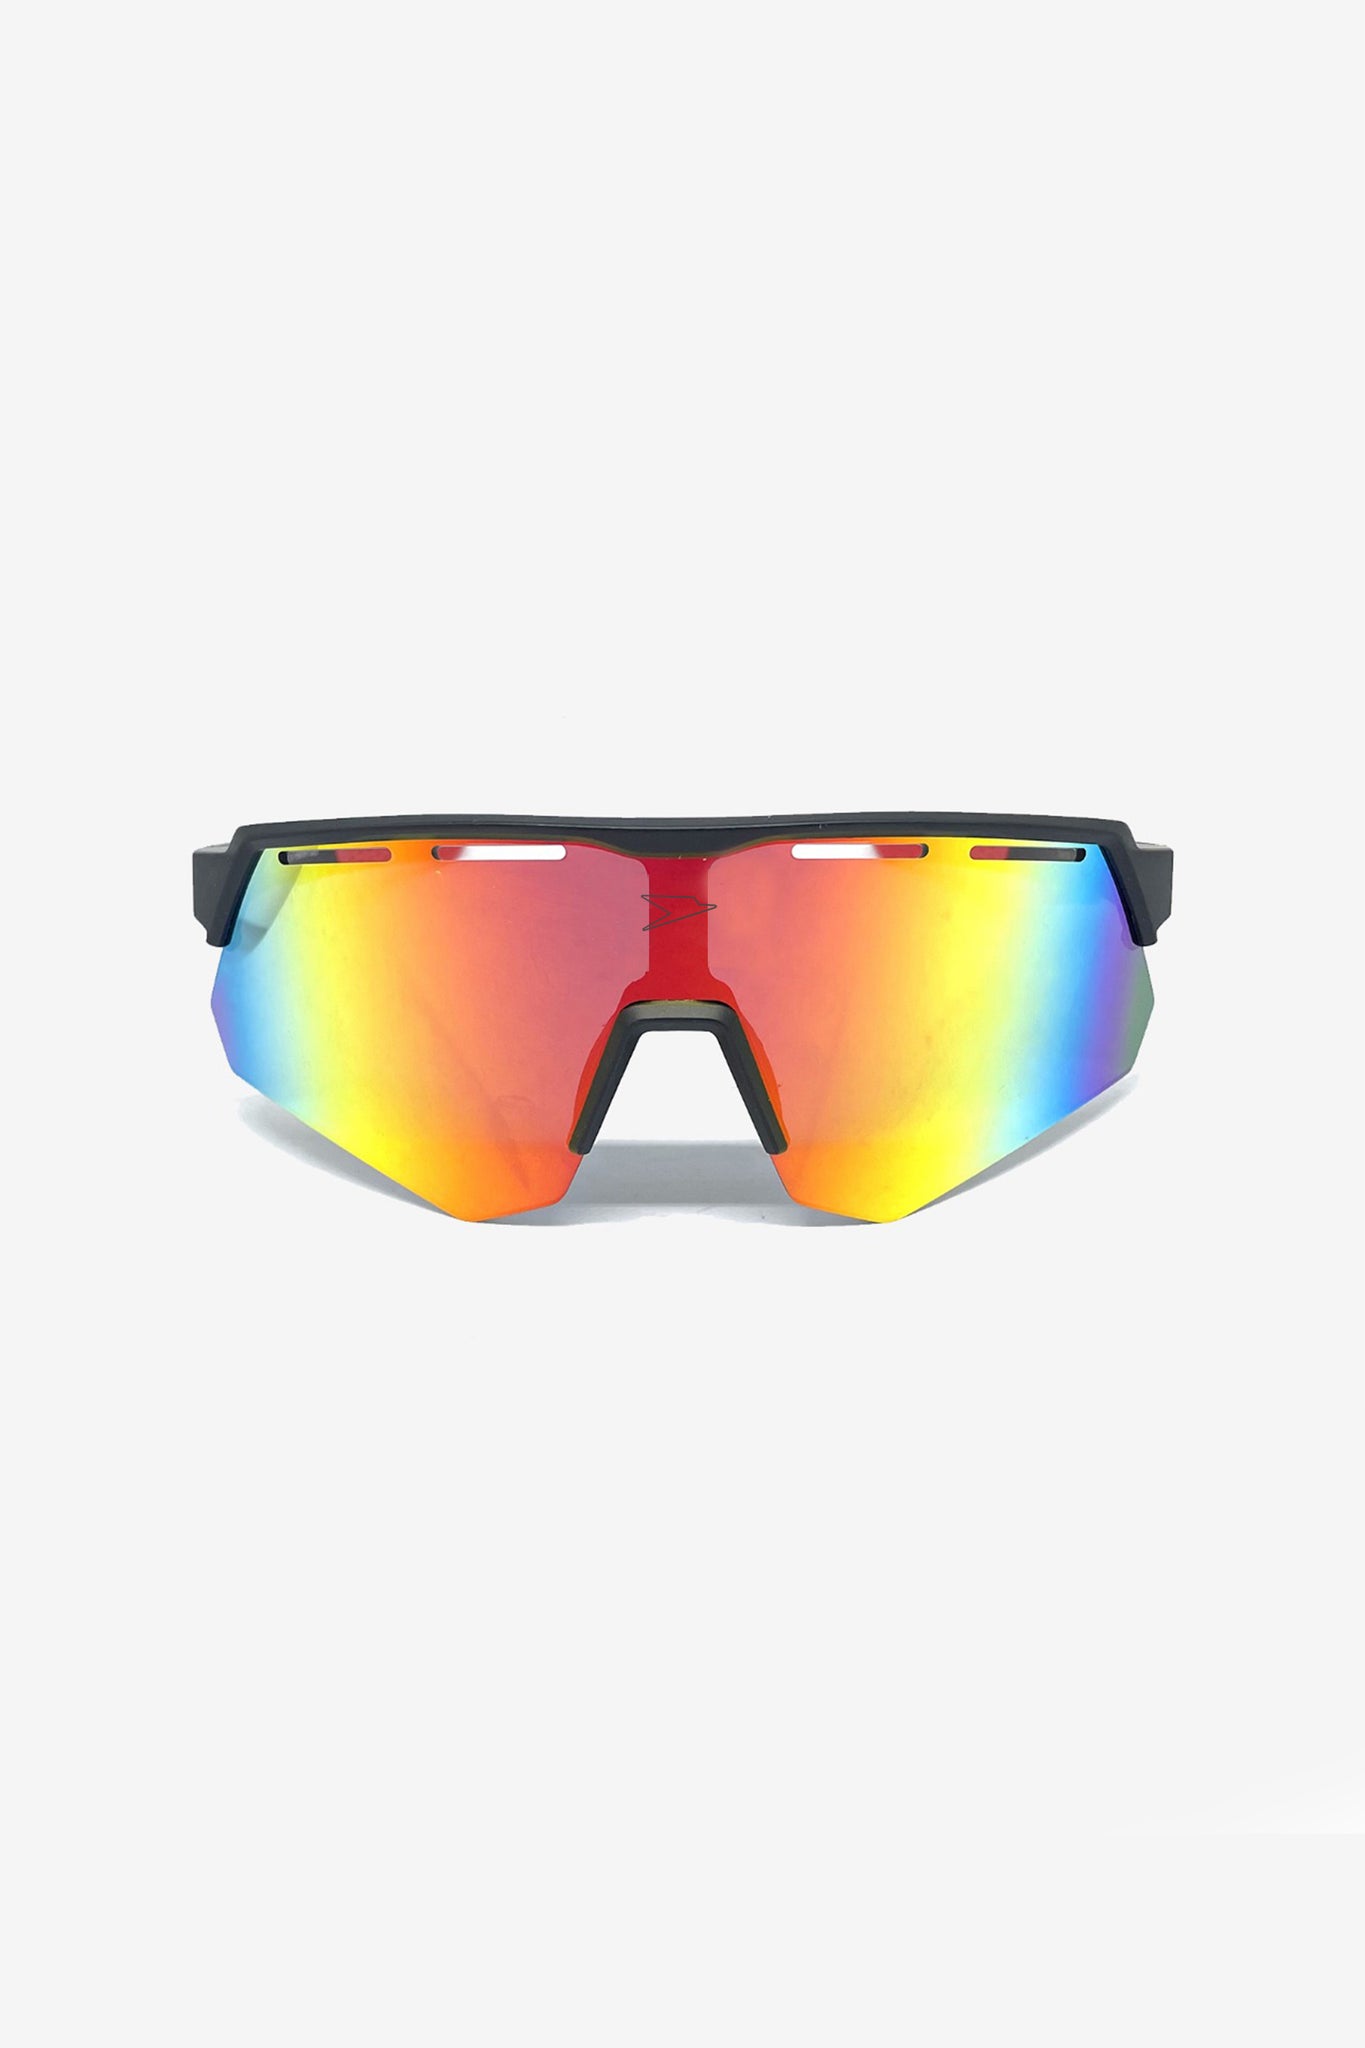 Sunglasses "RESORT" Explorer Black/Orange